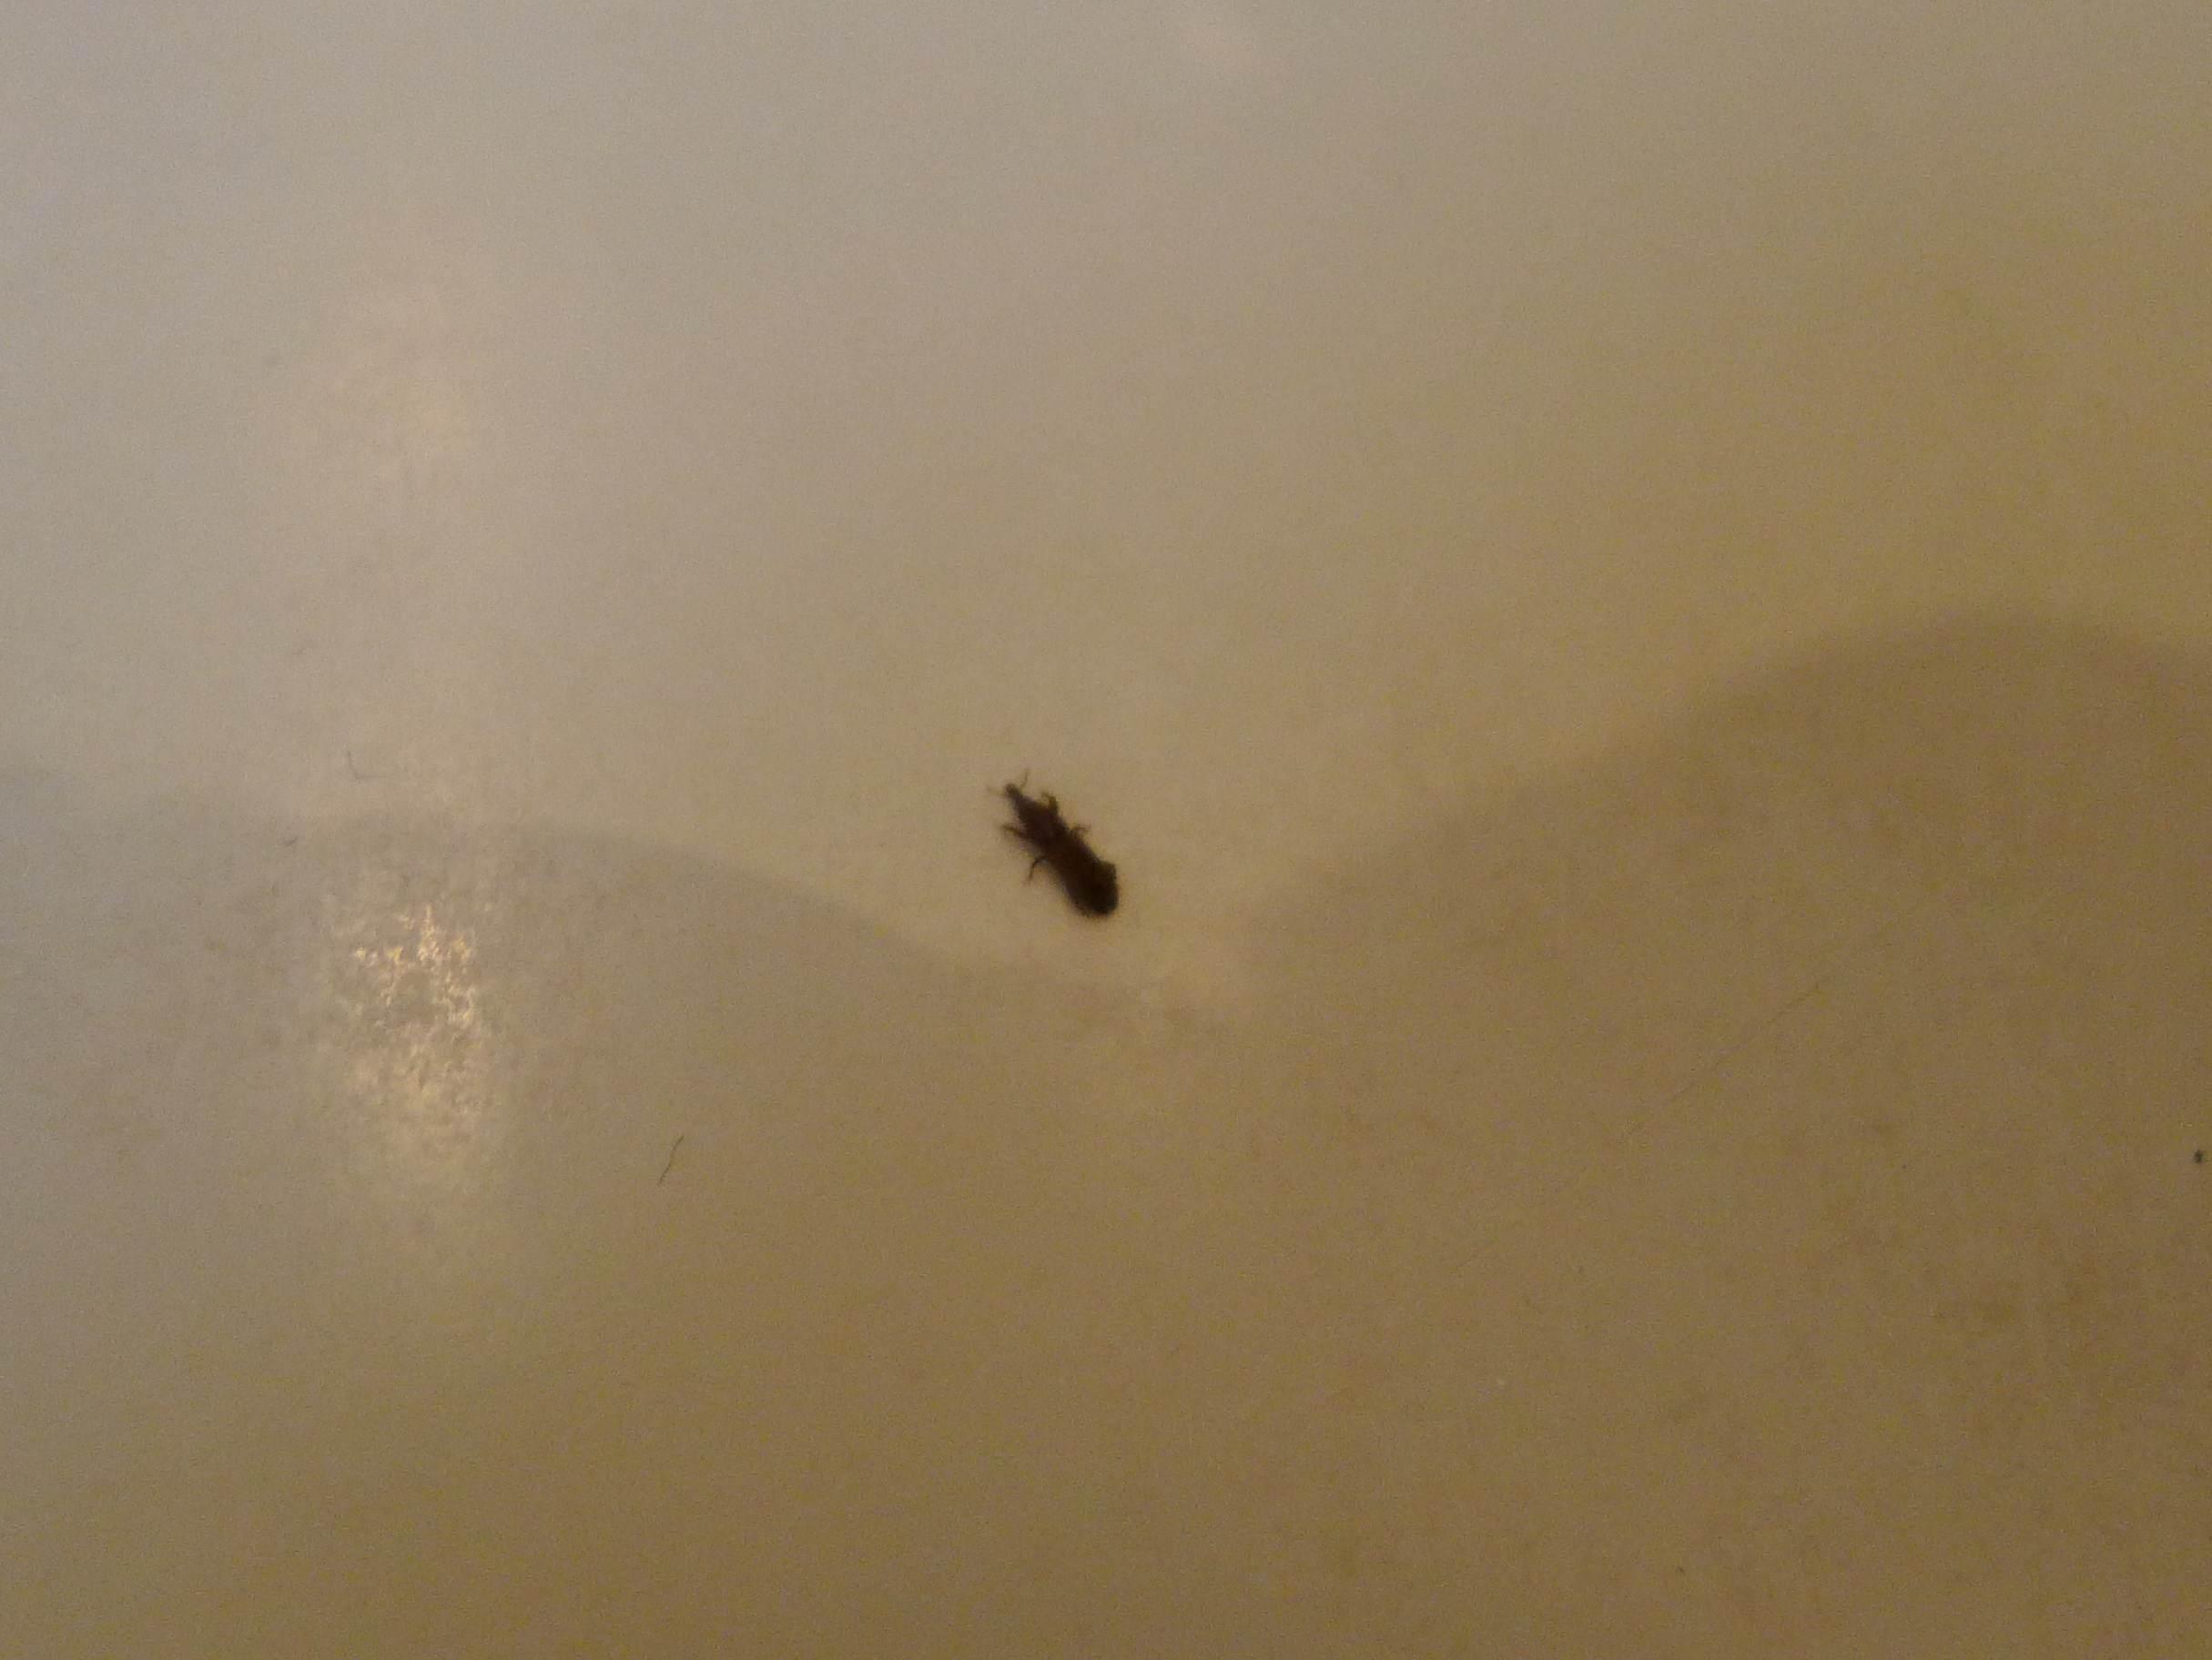 Small Black Bugs In Bathroom Luxury Getting Rid Get Rid Springtails In Tub Bedbugs Of Small Black Bugs In Bathroom 